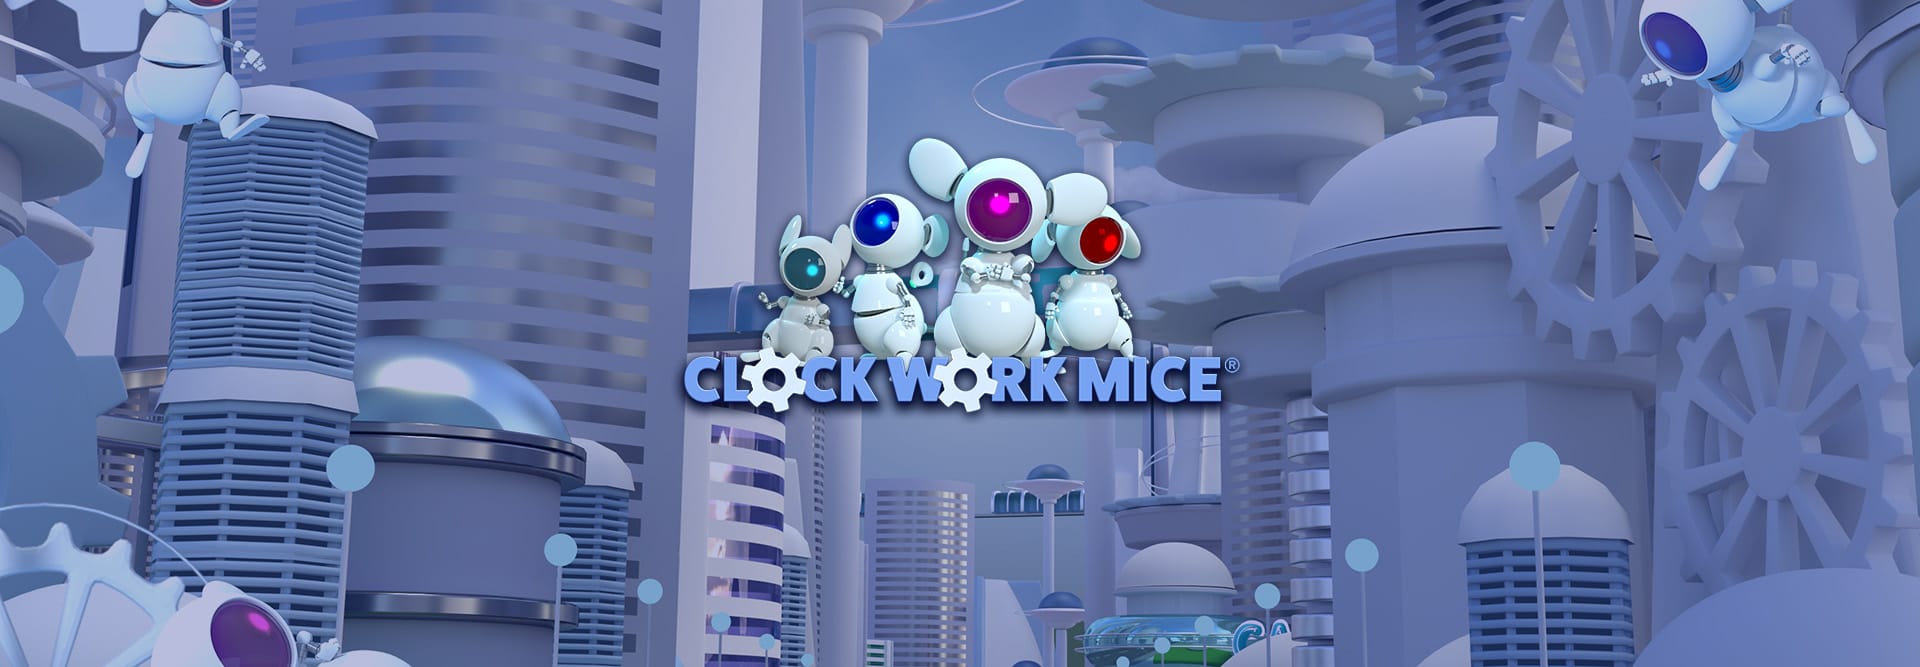 Clockwork Mice - Game Banner